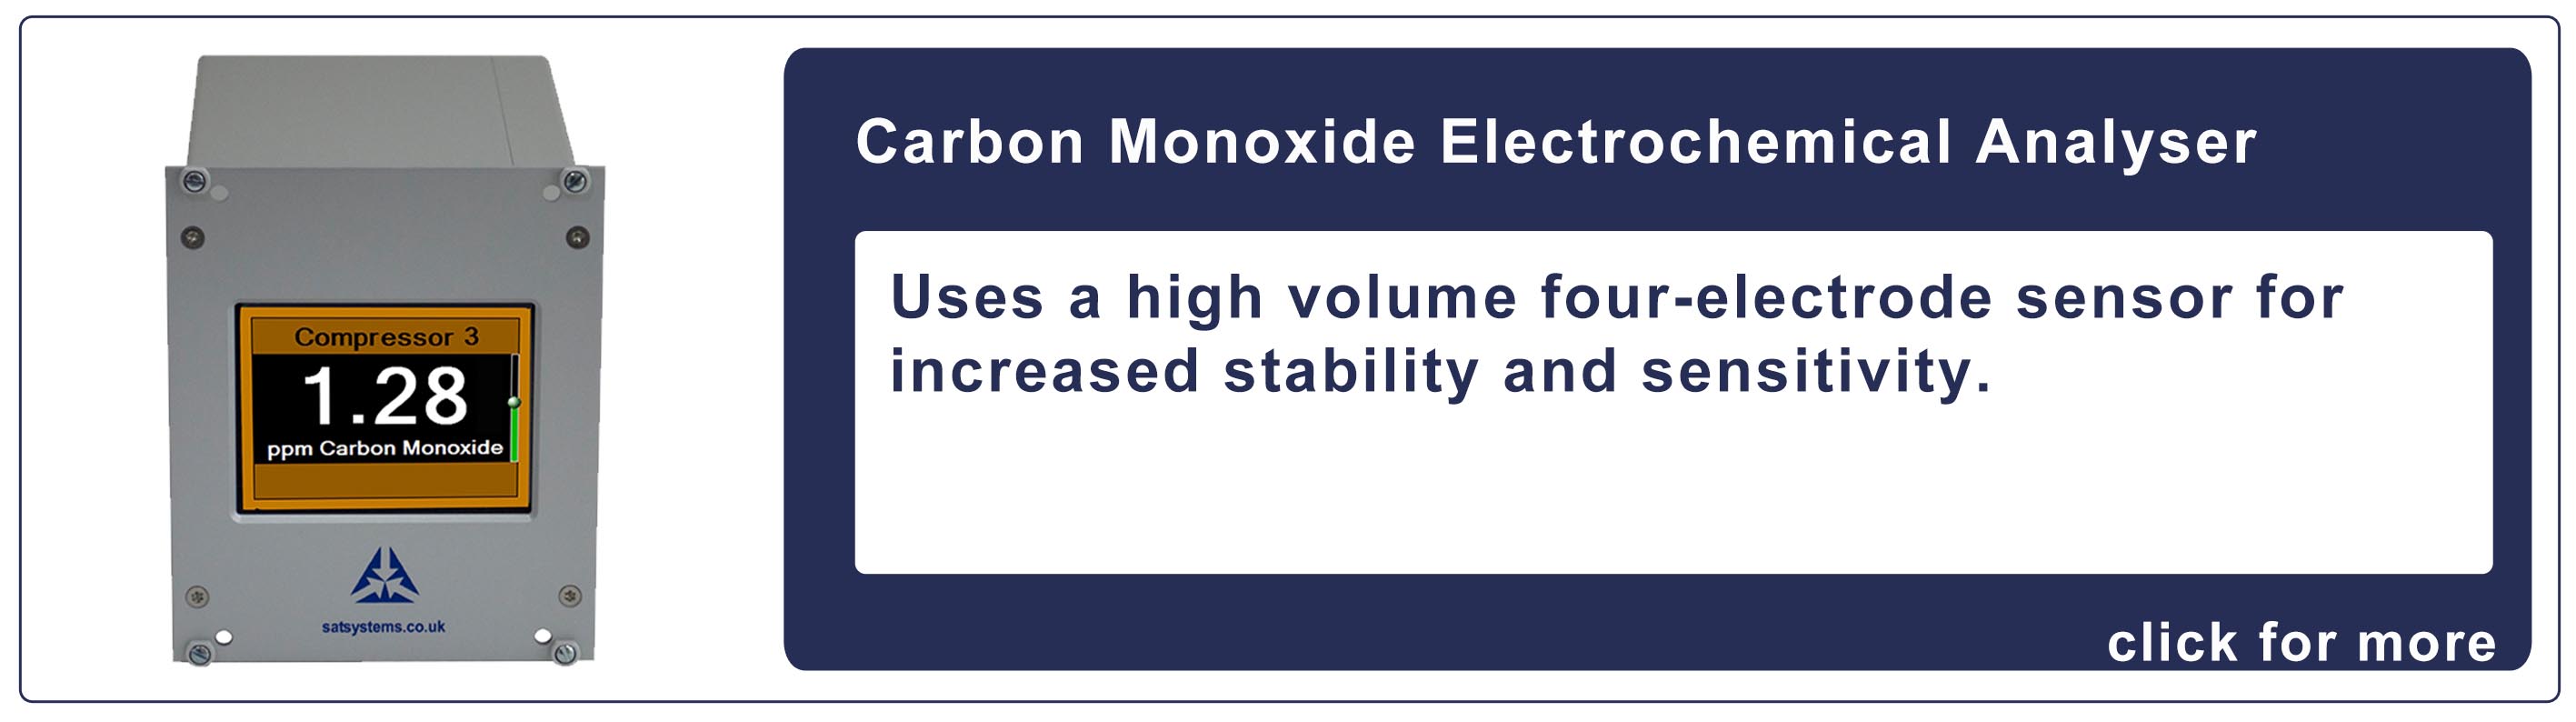 Carbon-Monoxide-Electrochemical-Analyser